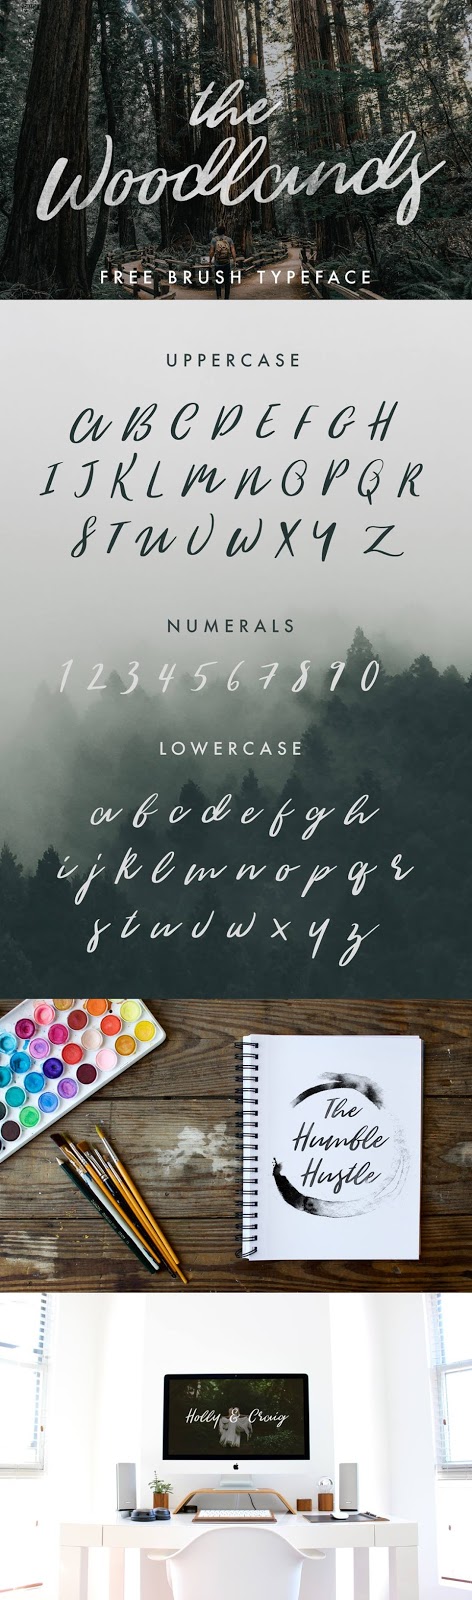 Download Font Terbaru 2016 - The Woodlands Typeface